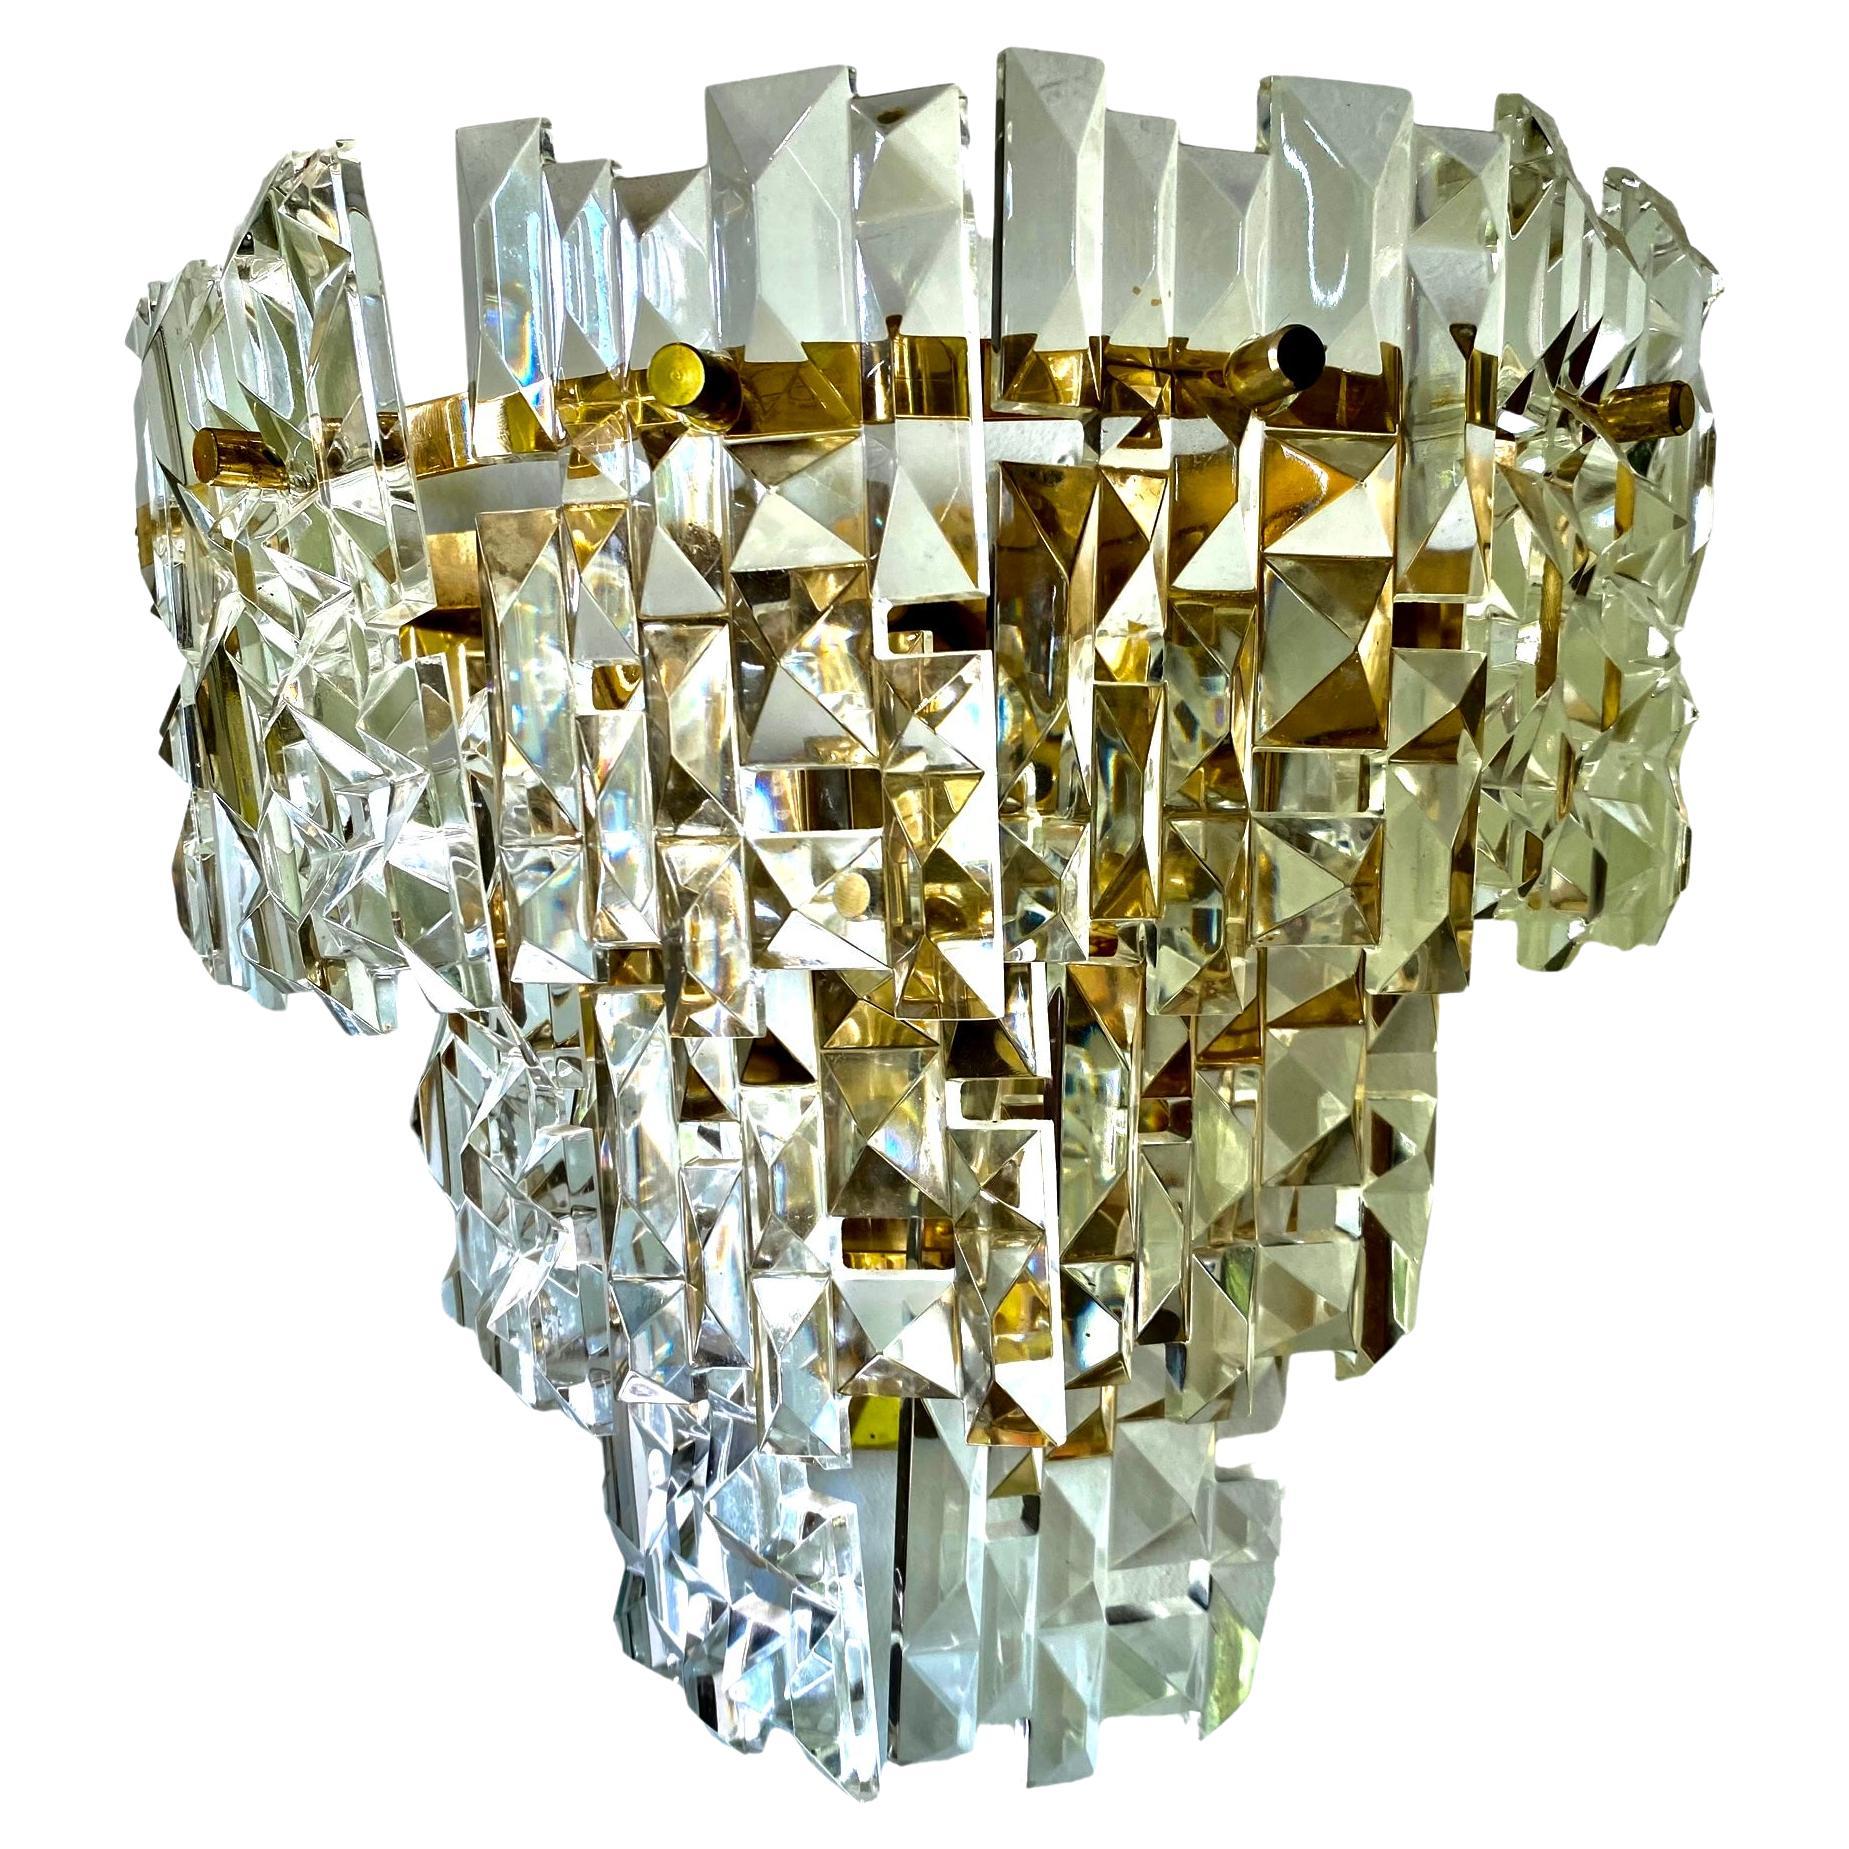 Kinkeldey Wall Lighting Glass Cut with Brass Structure, Austria, 1970 For Sale